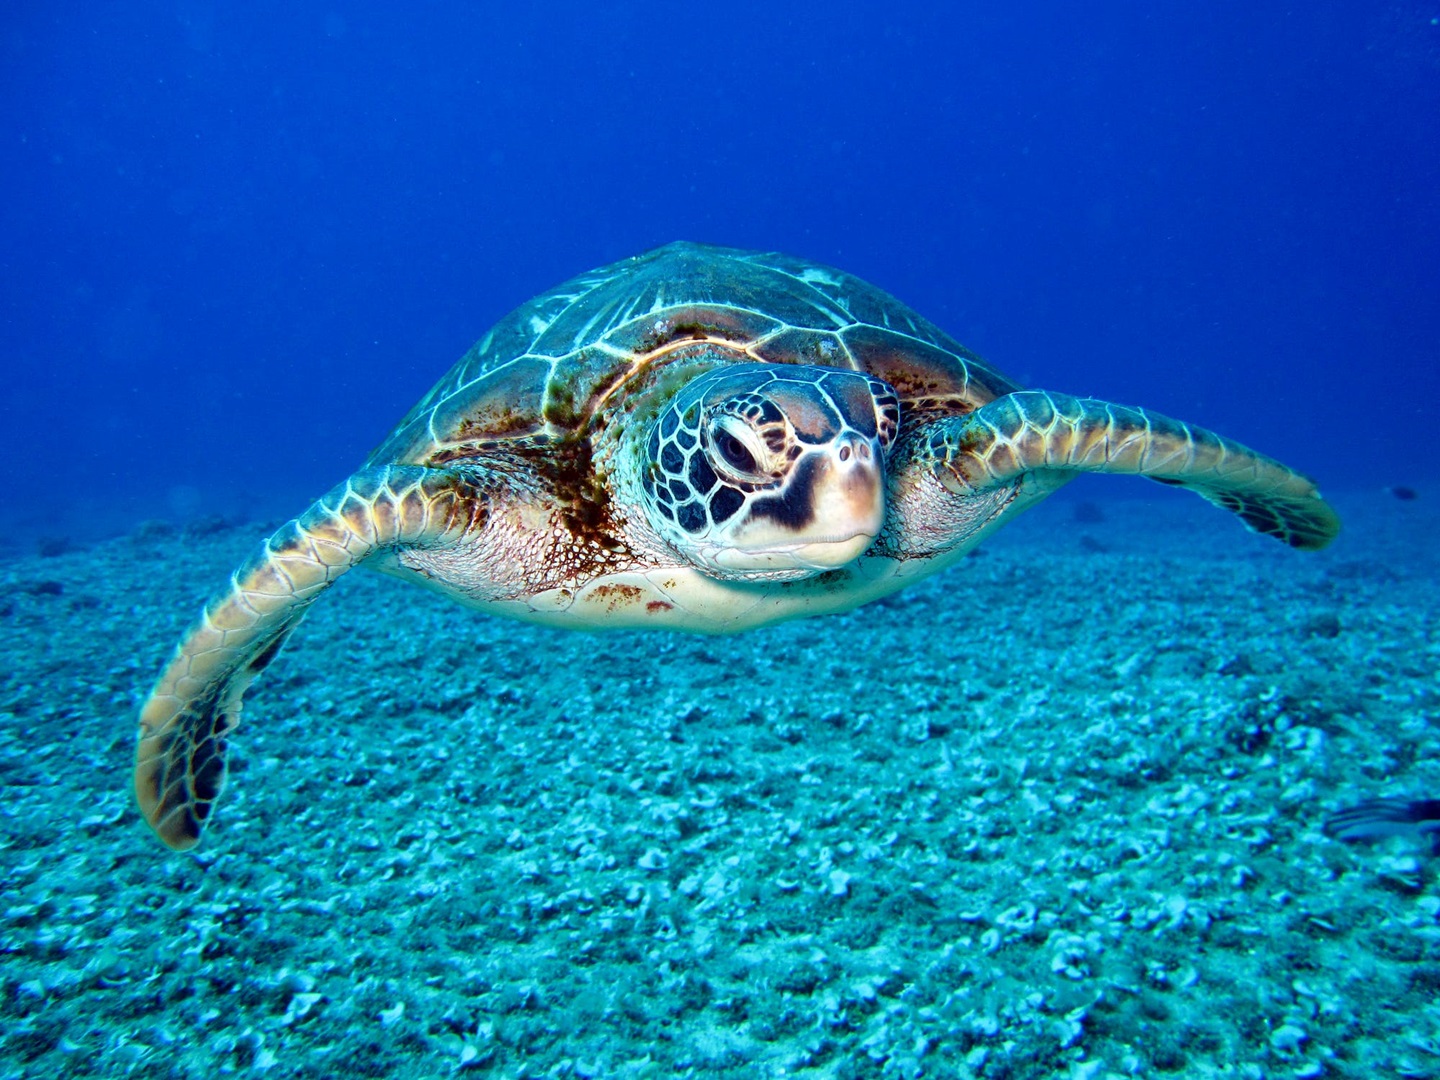 florida-keys-home-of-the-endangered-sea-turtle